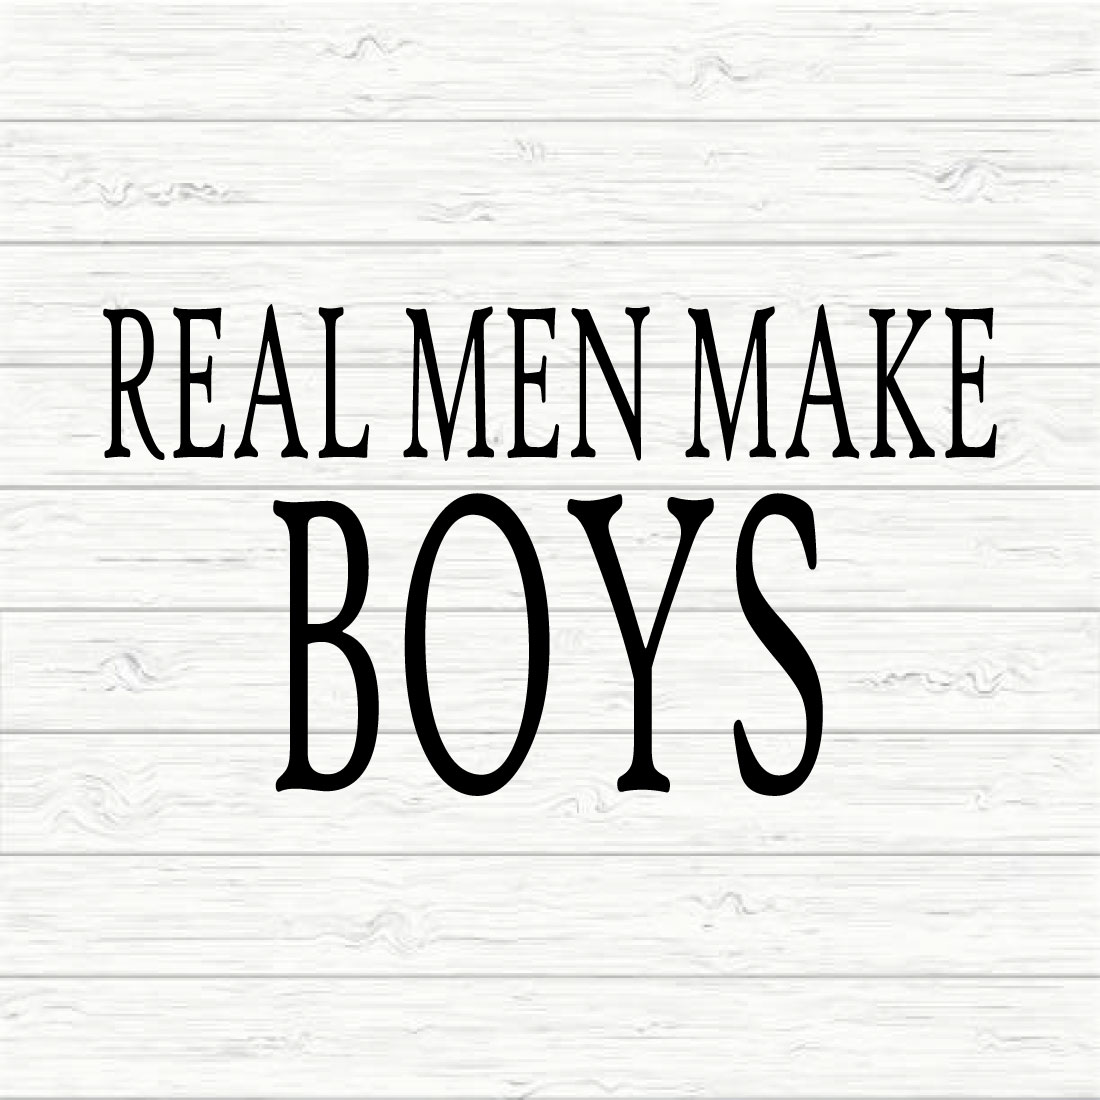 Real Men Make Boys preview image.